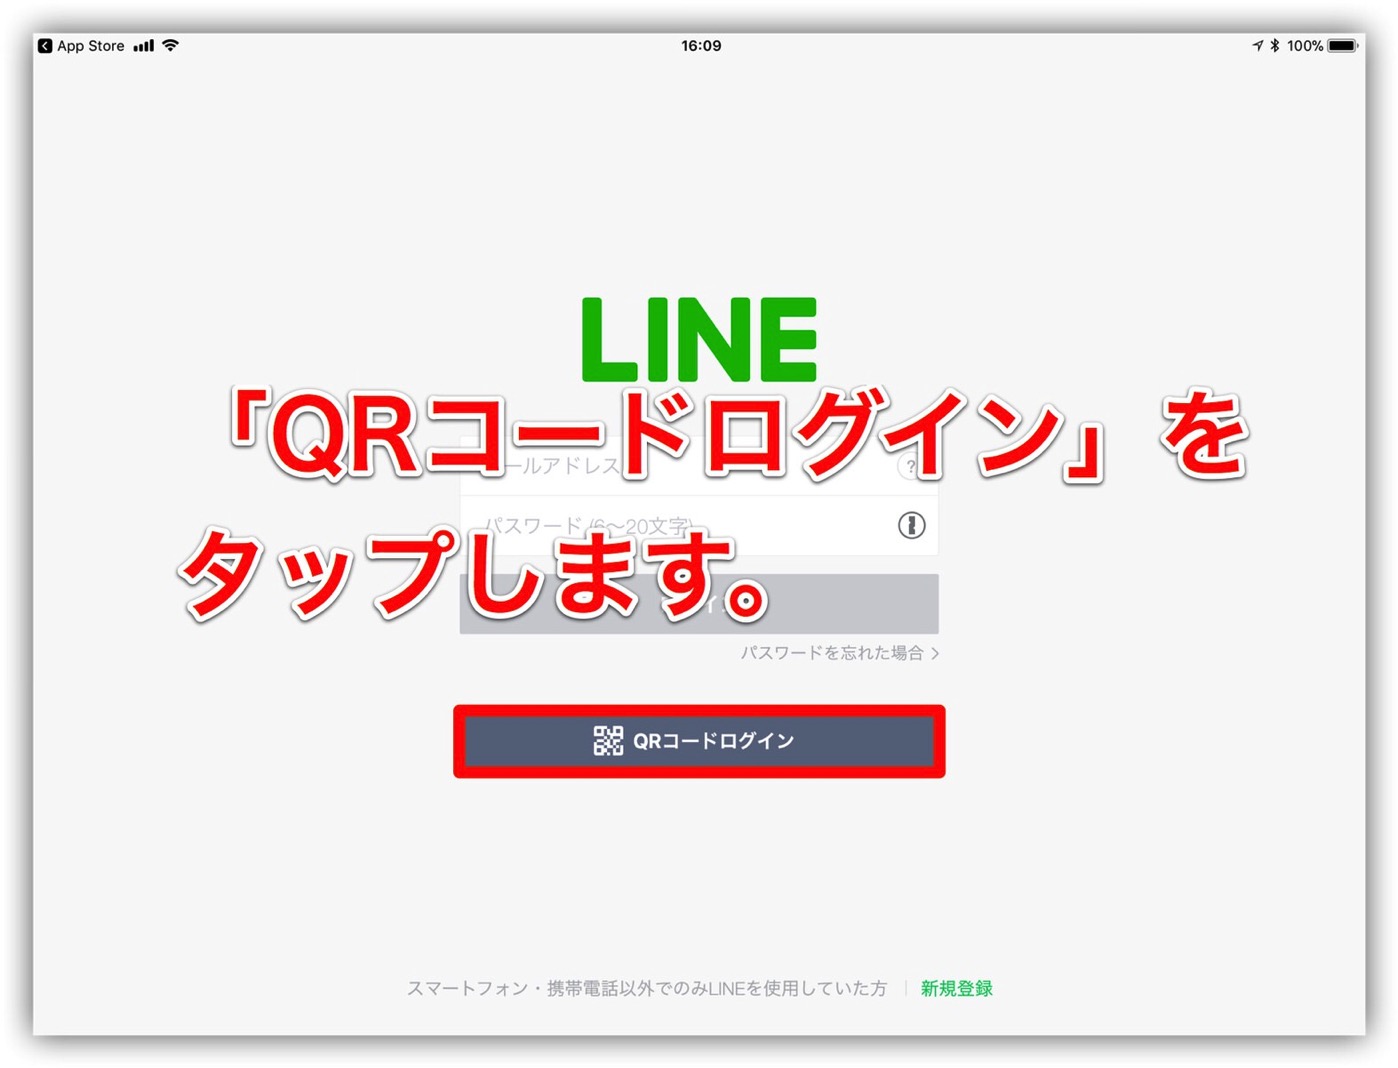 LINE-2